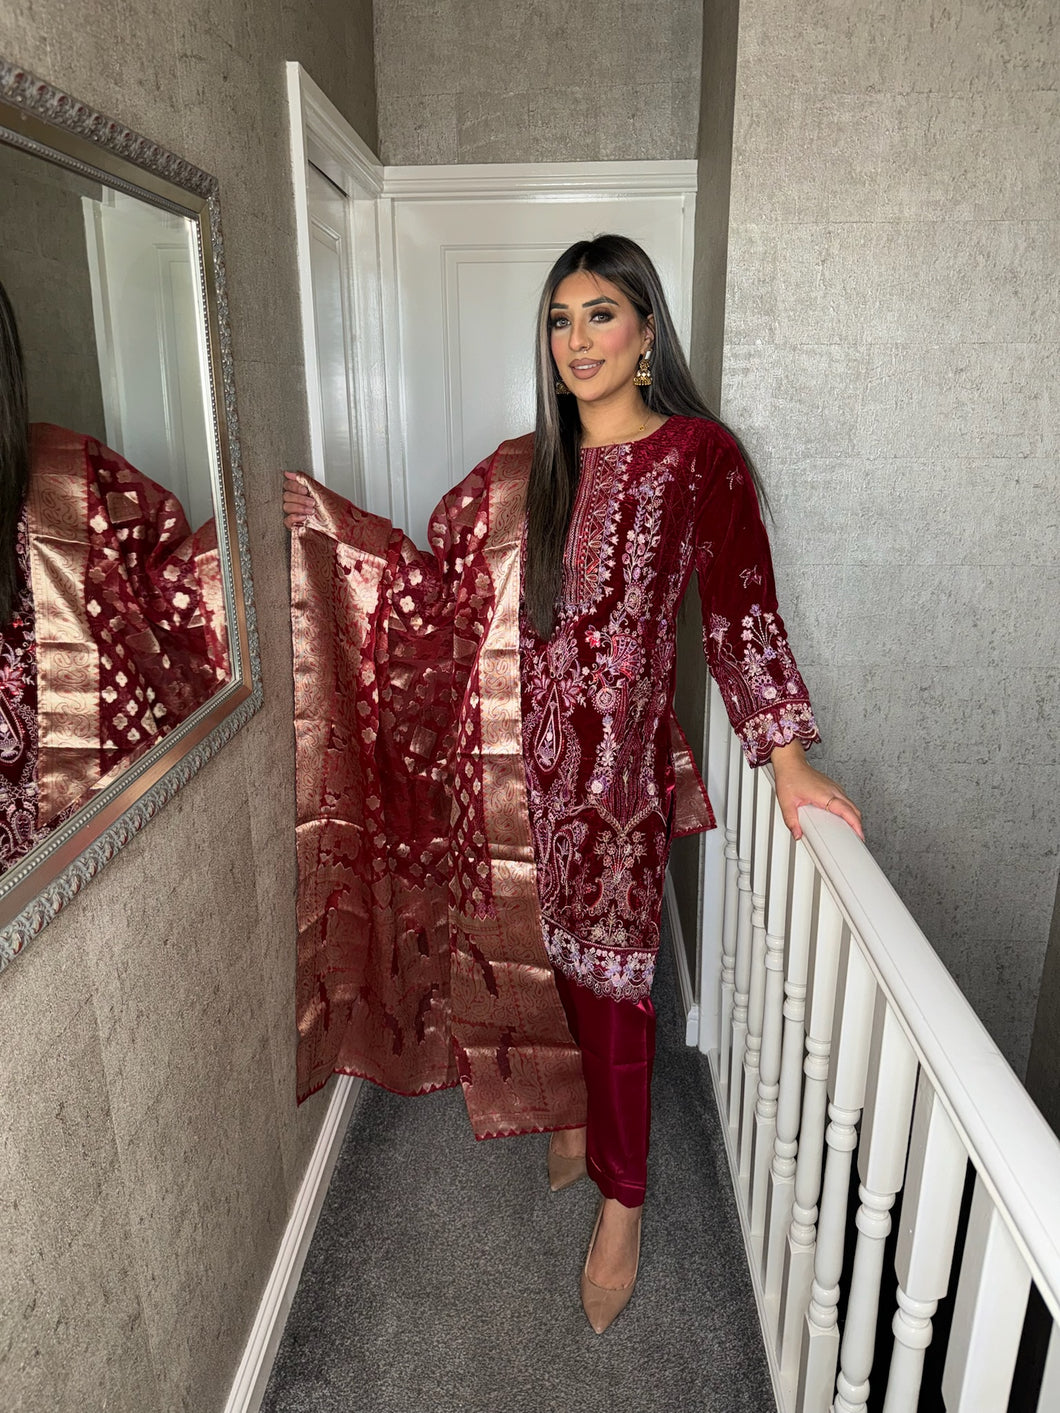 3pc MAROON VELVET Embroidered Shalwar Kameez with NET/Velvet dupatta Stitched Suit Ready to wear HW-DT117A